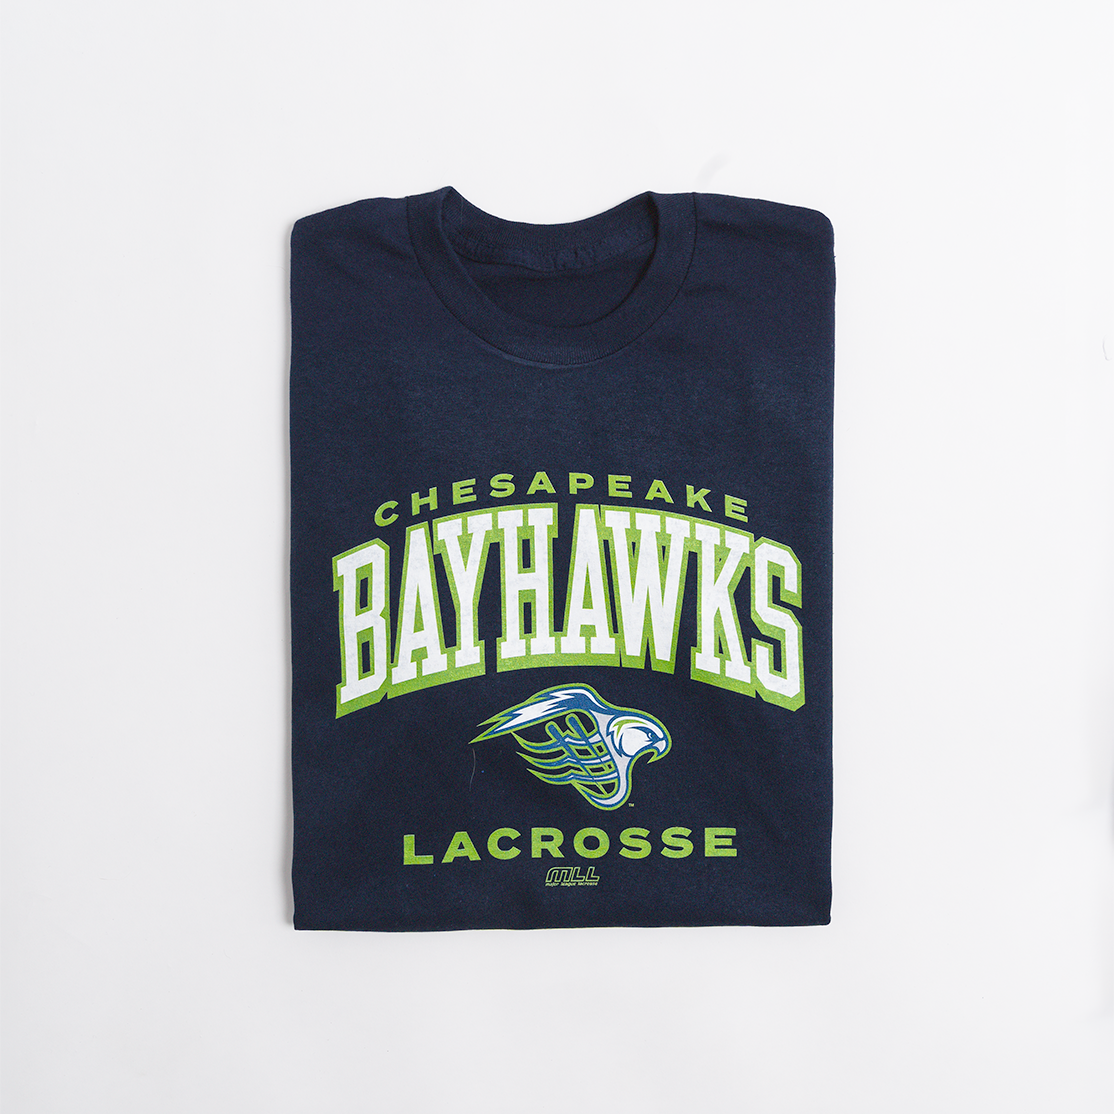 Chesapeake Baywhawks Lacrosse Tee